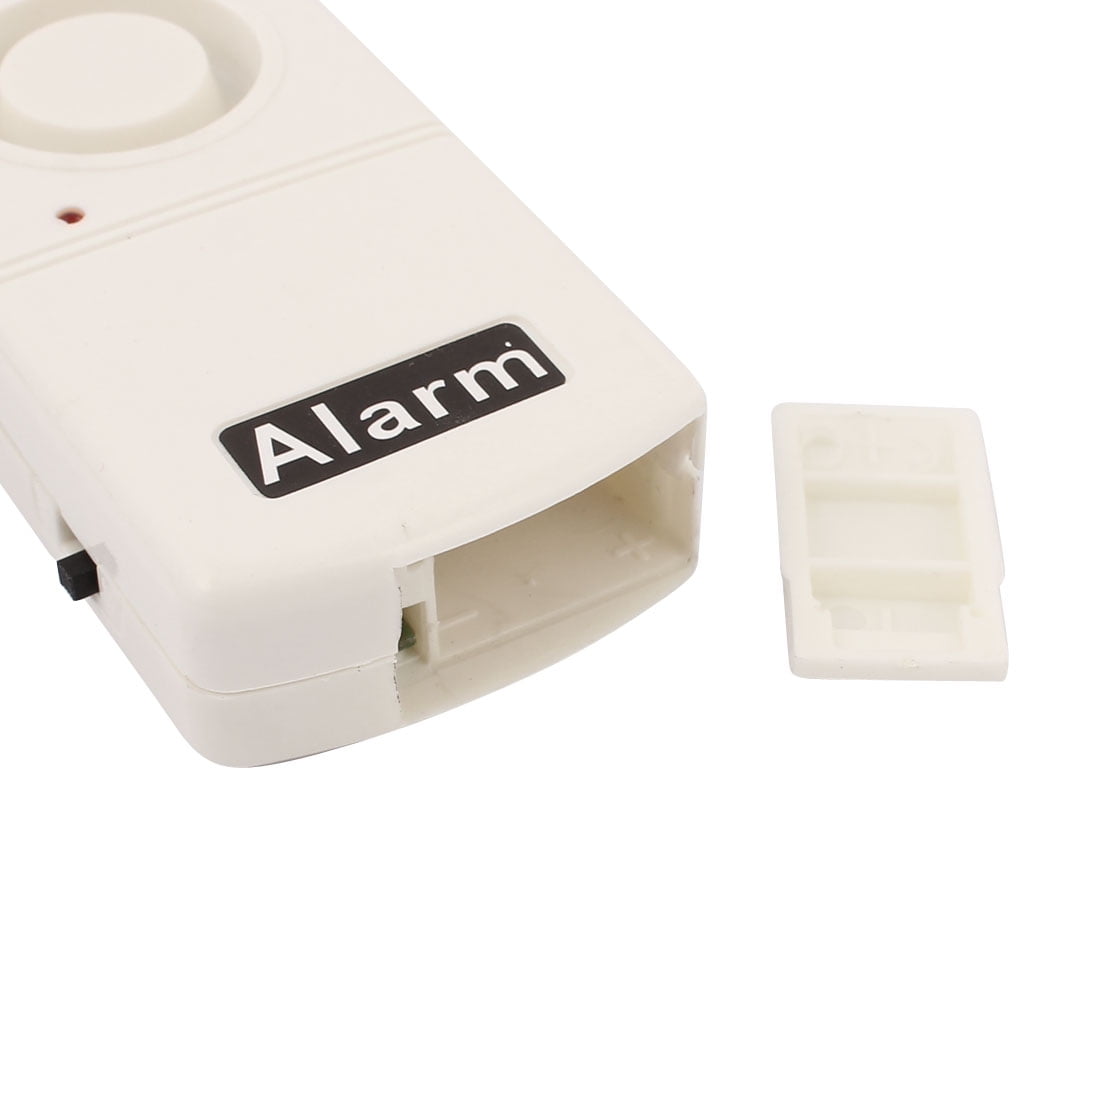 Power Failure Alarm Power Off Detector Sensor Large Volume Alarm System for Computer Room Home 220V